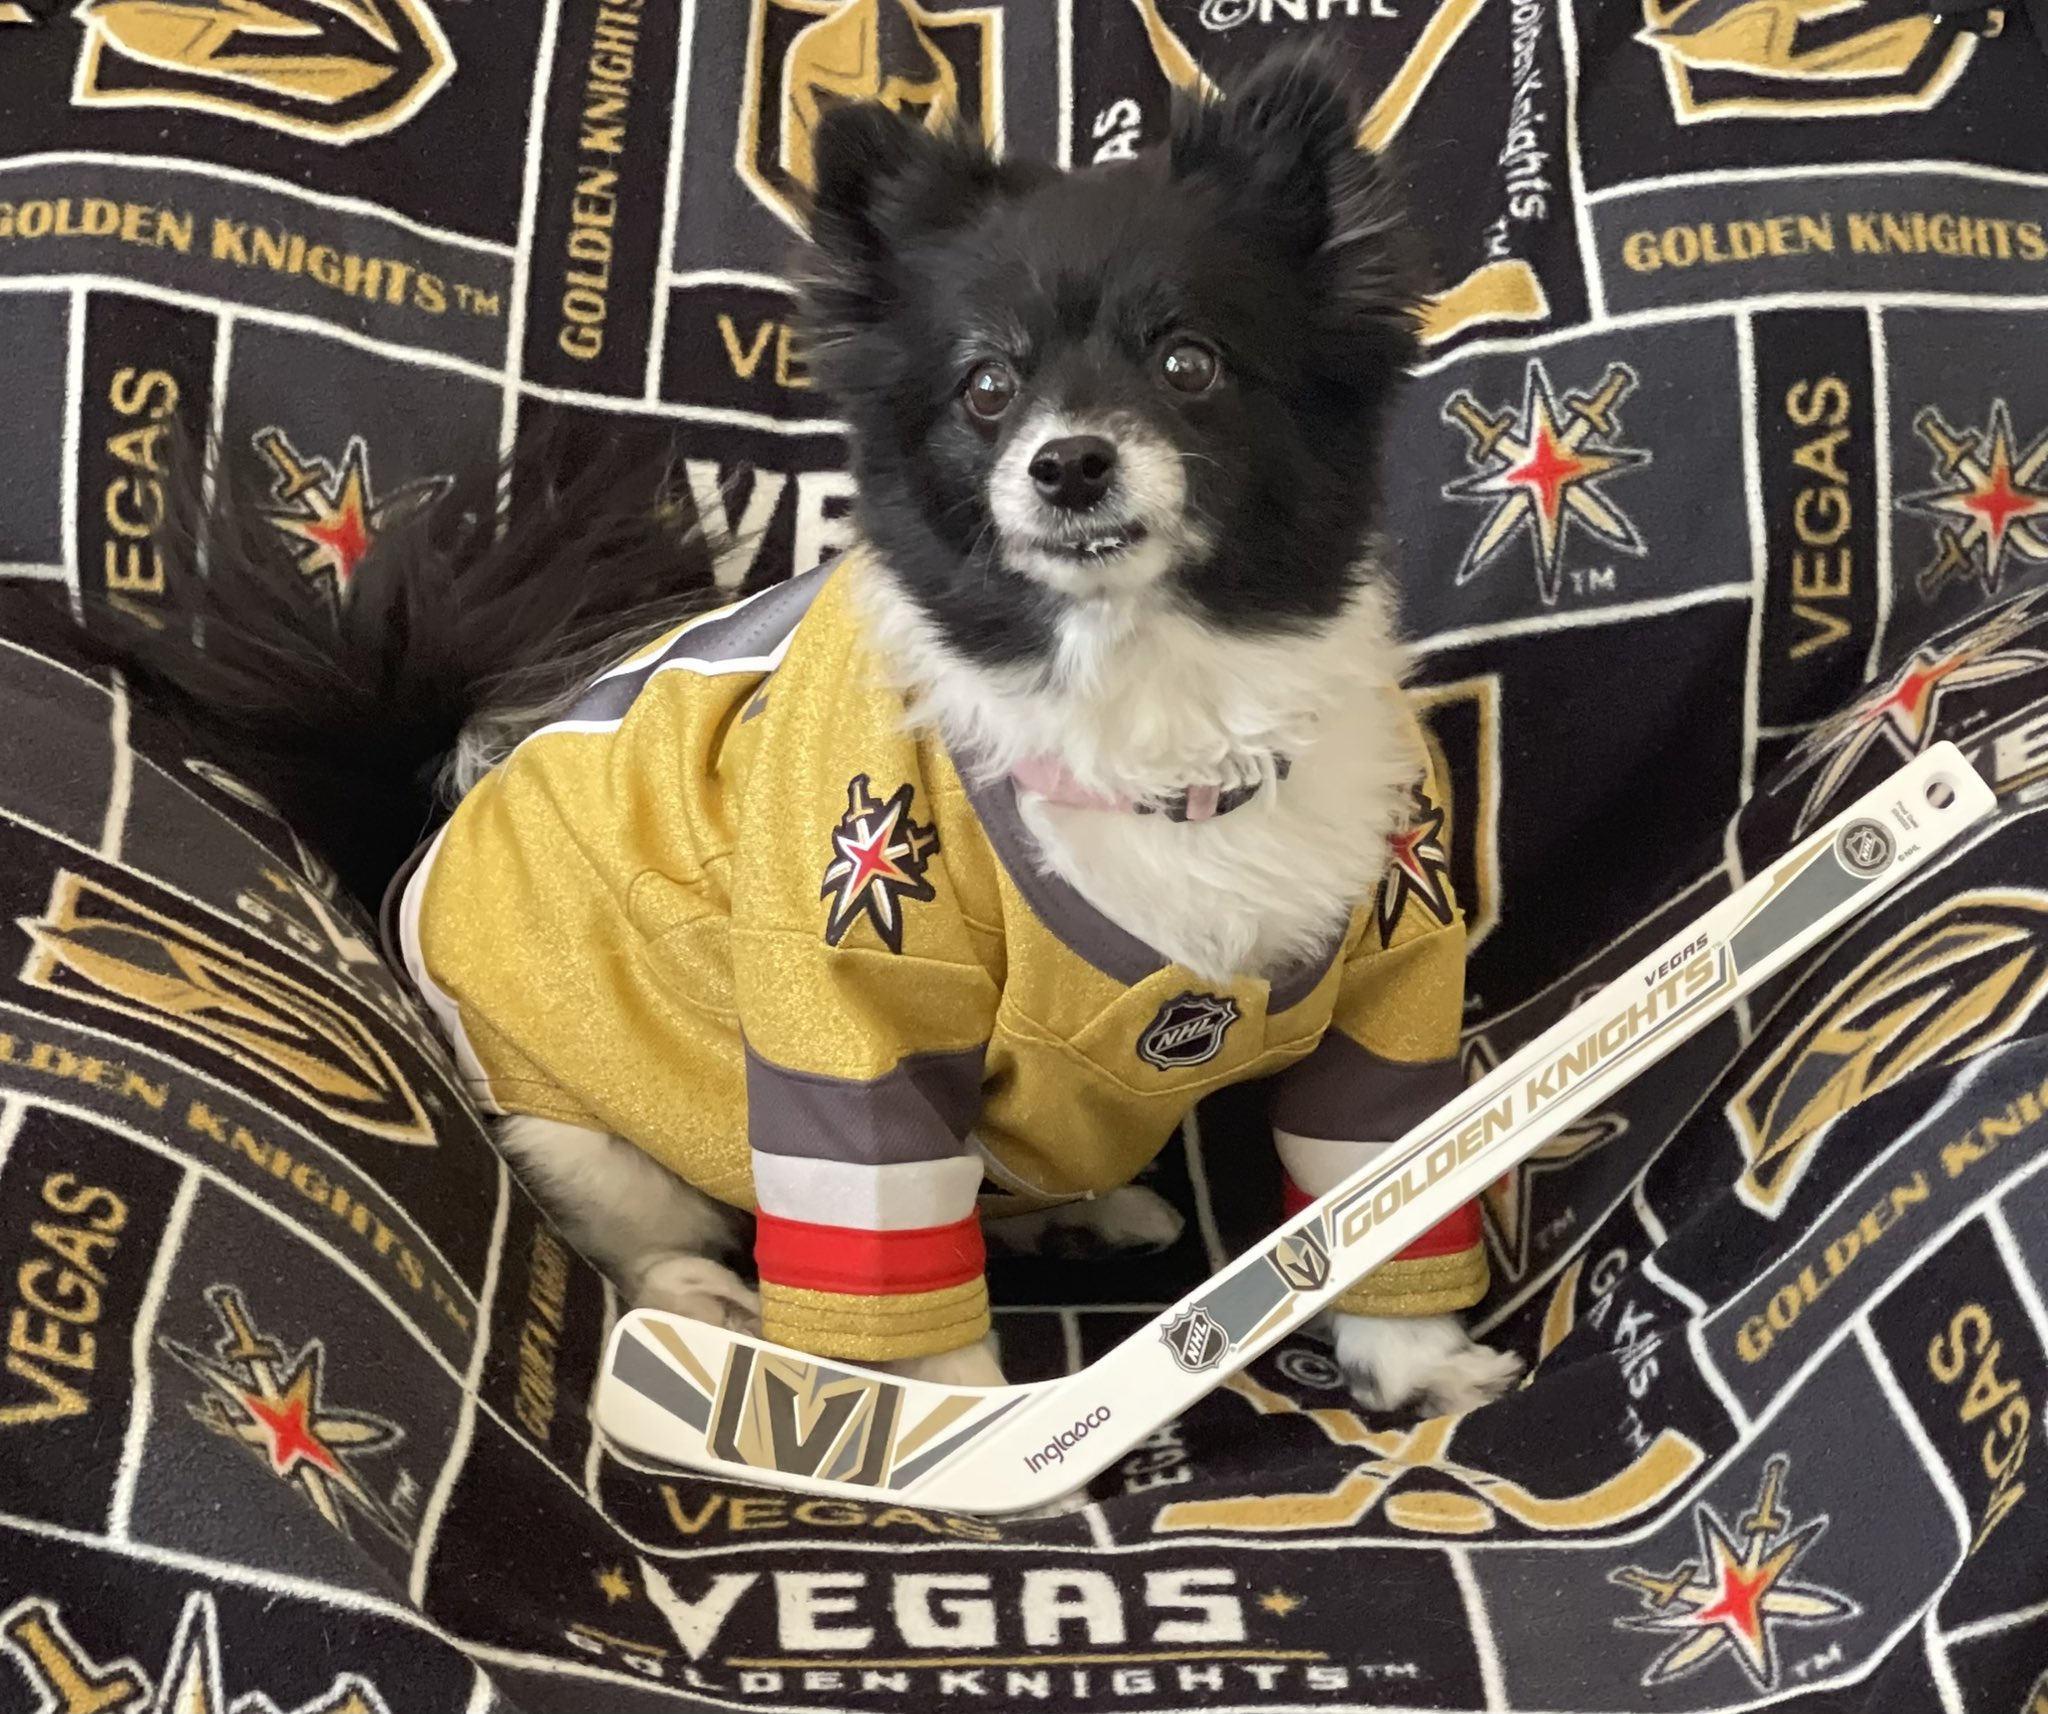 Vegas Golden Knights Pet Jersey - Medium